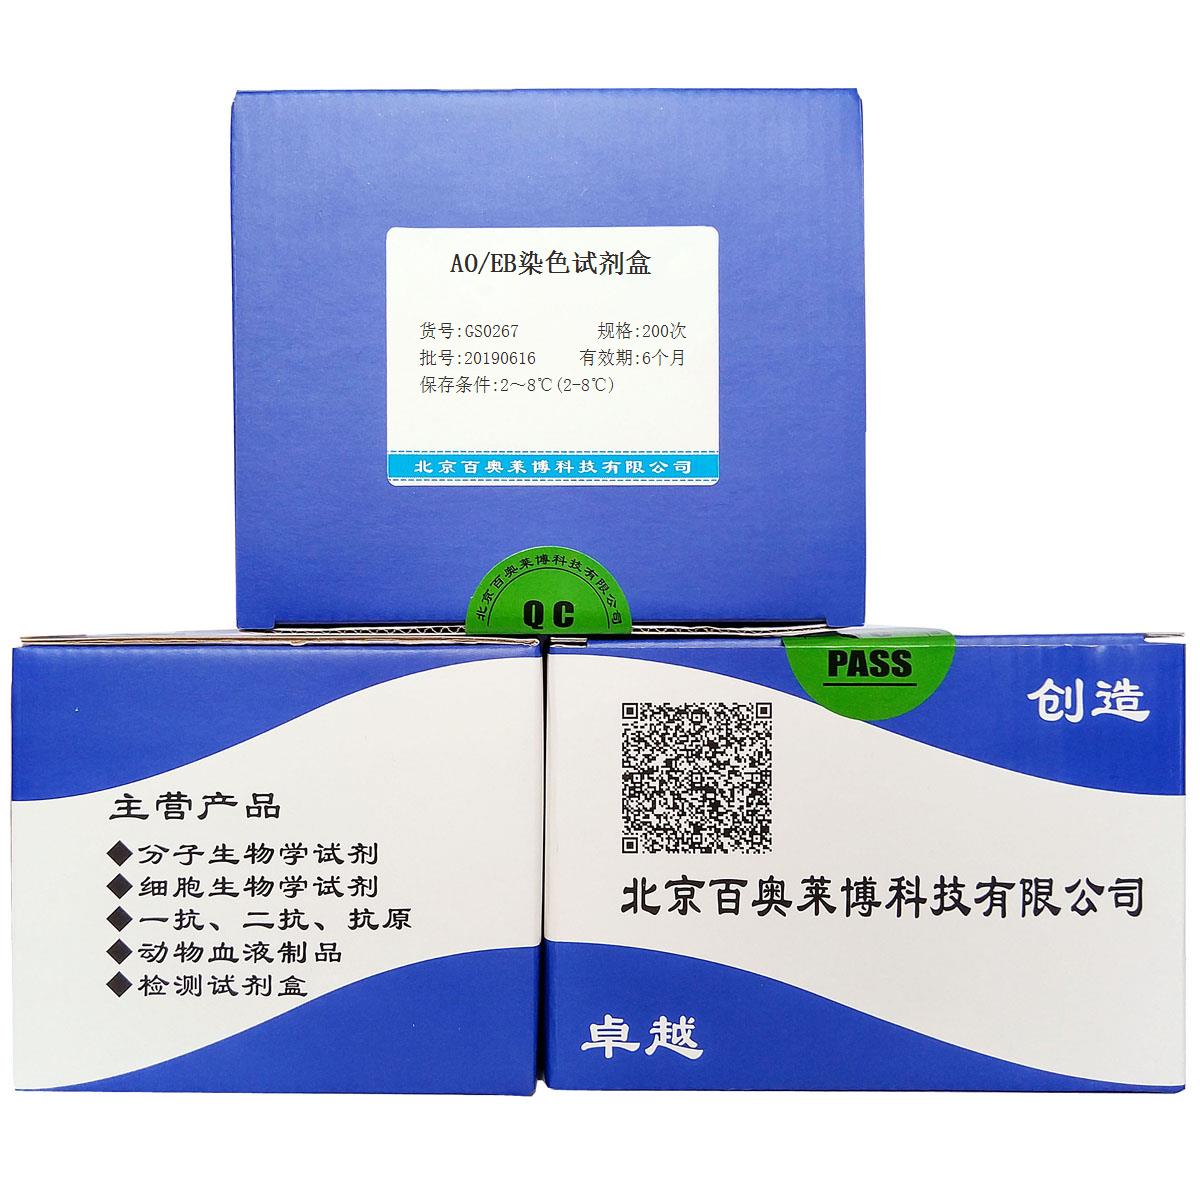 AO/EB染色试剂盒北京价格